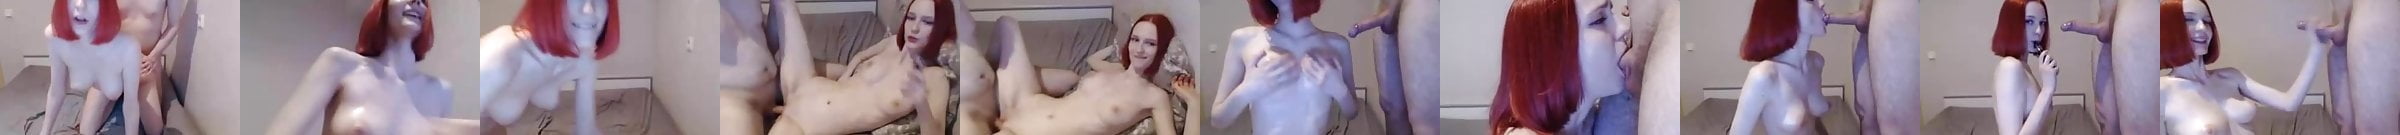 Christina Hendricks Big Boobs Pale Redhead 76 Pics Xhamster